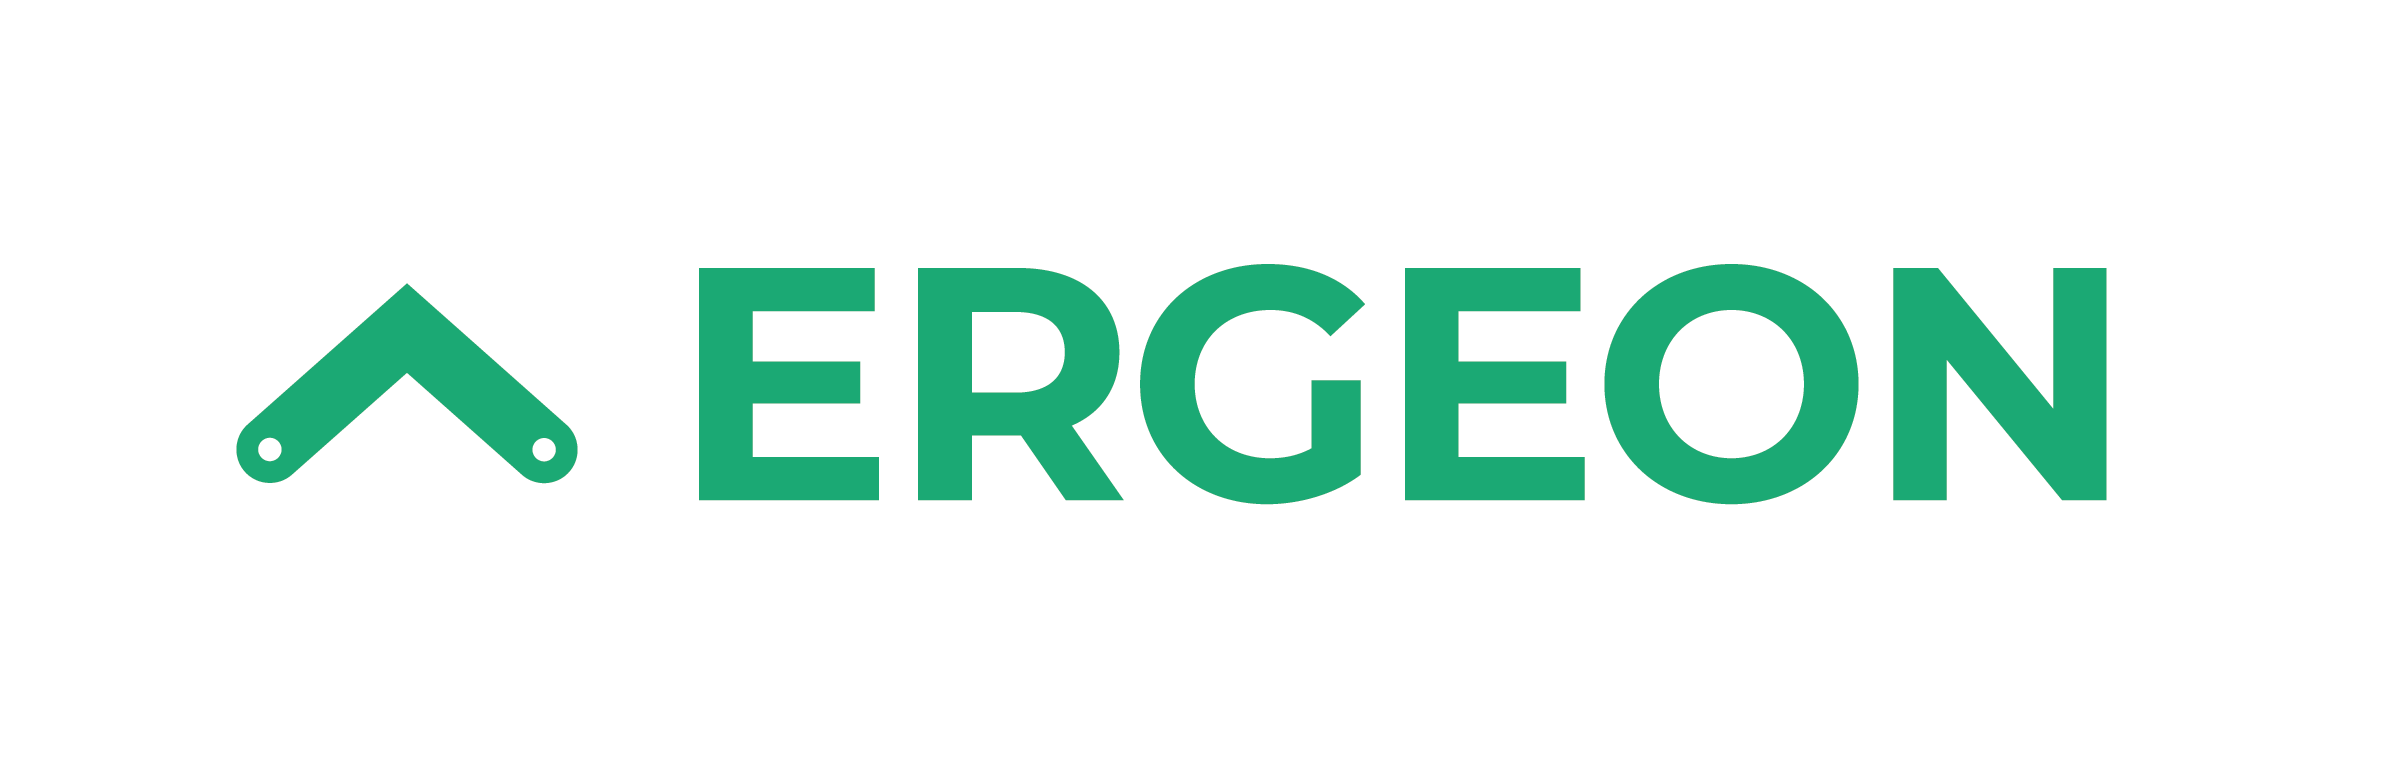 Ergeon Logo